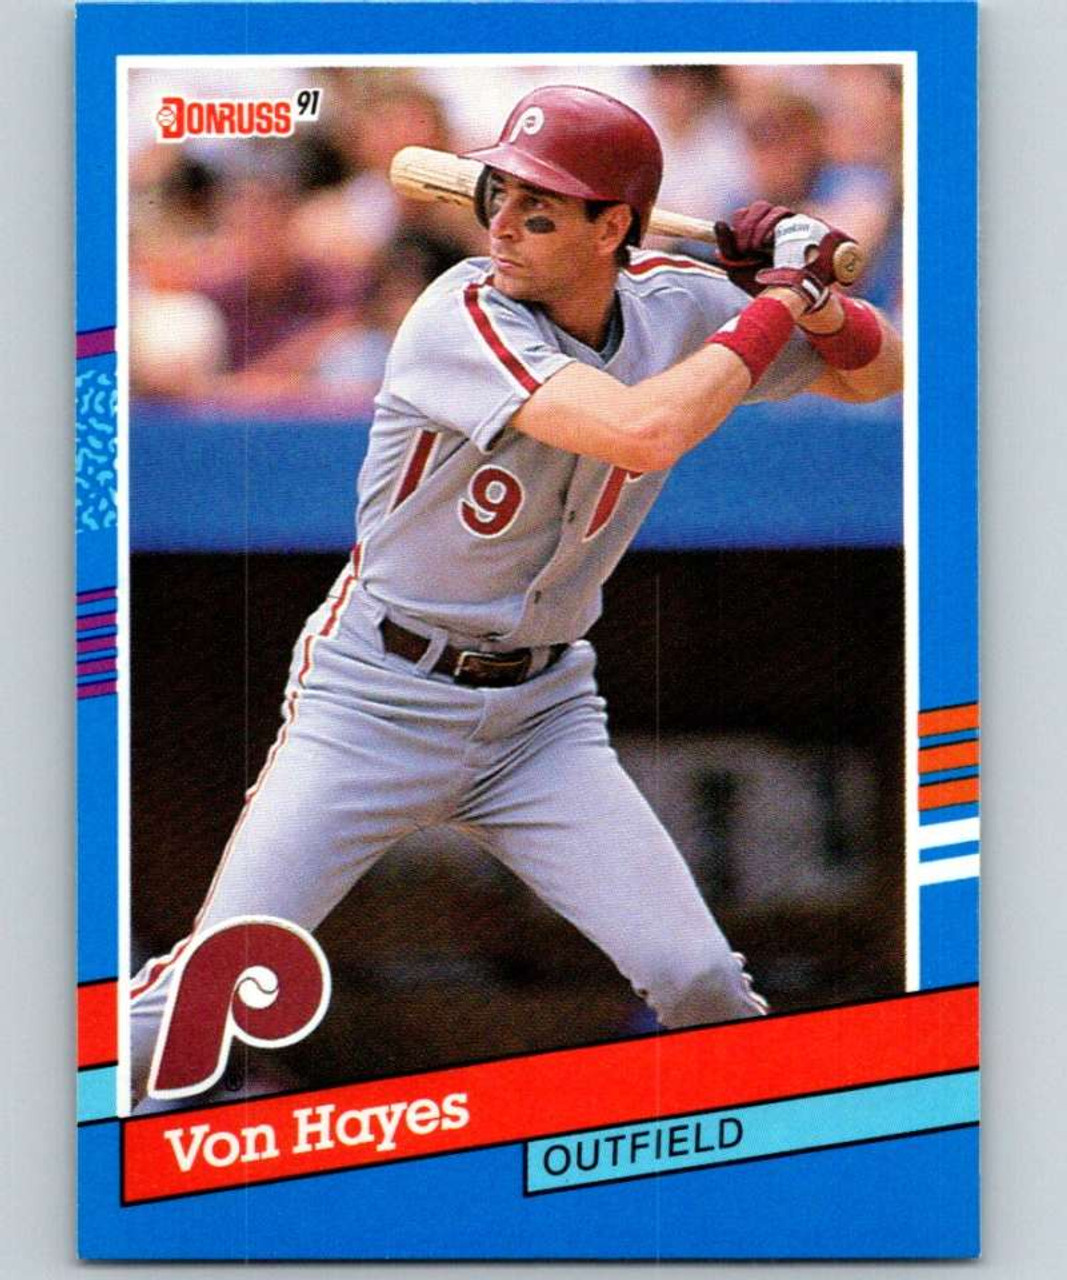 Sold at Auction: 1987 Von Hayes autographed Philadelphia Phillies